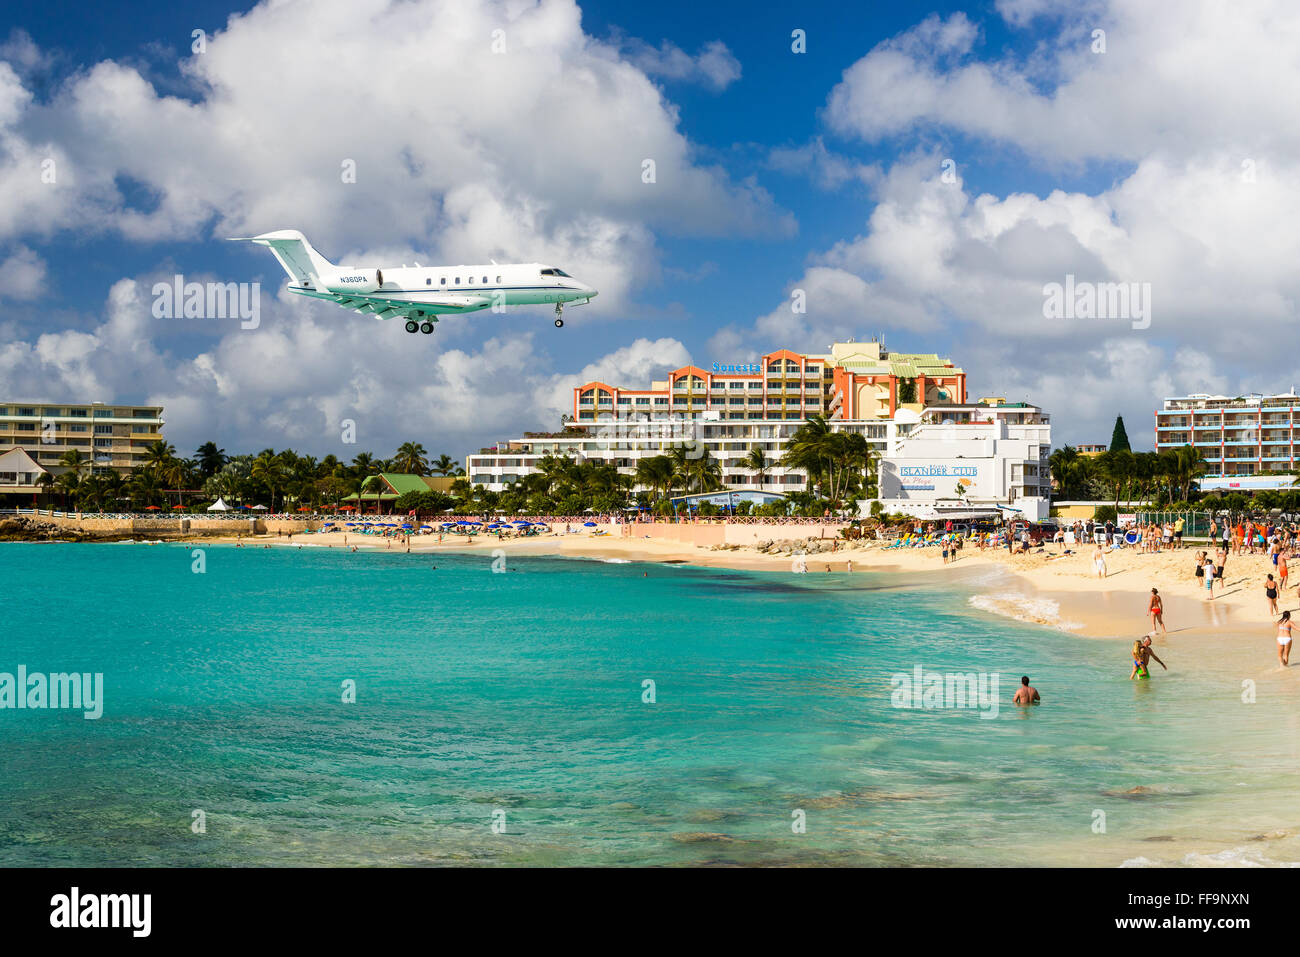 A jet approaches Princess Juliana Airport above onlookers on Maho Beach in Philipsburg, Sint Maarten. Stock Photo